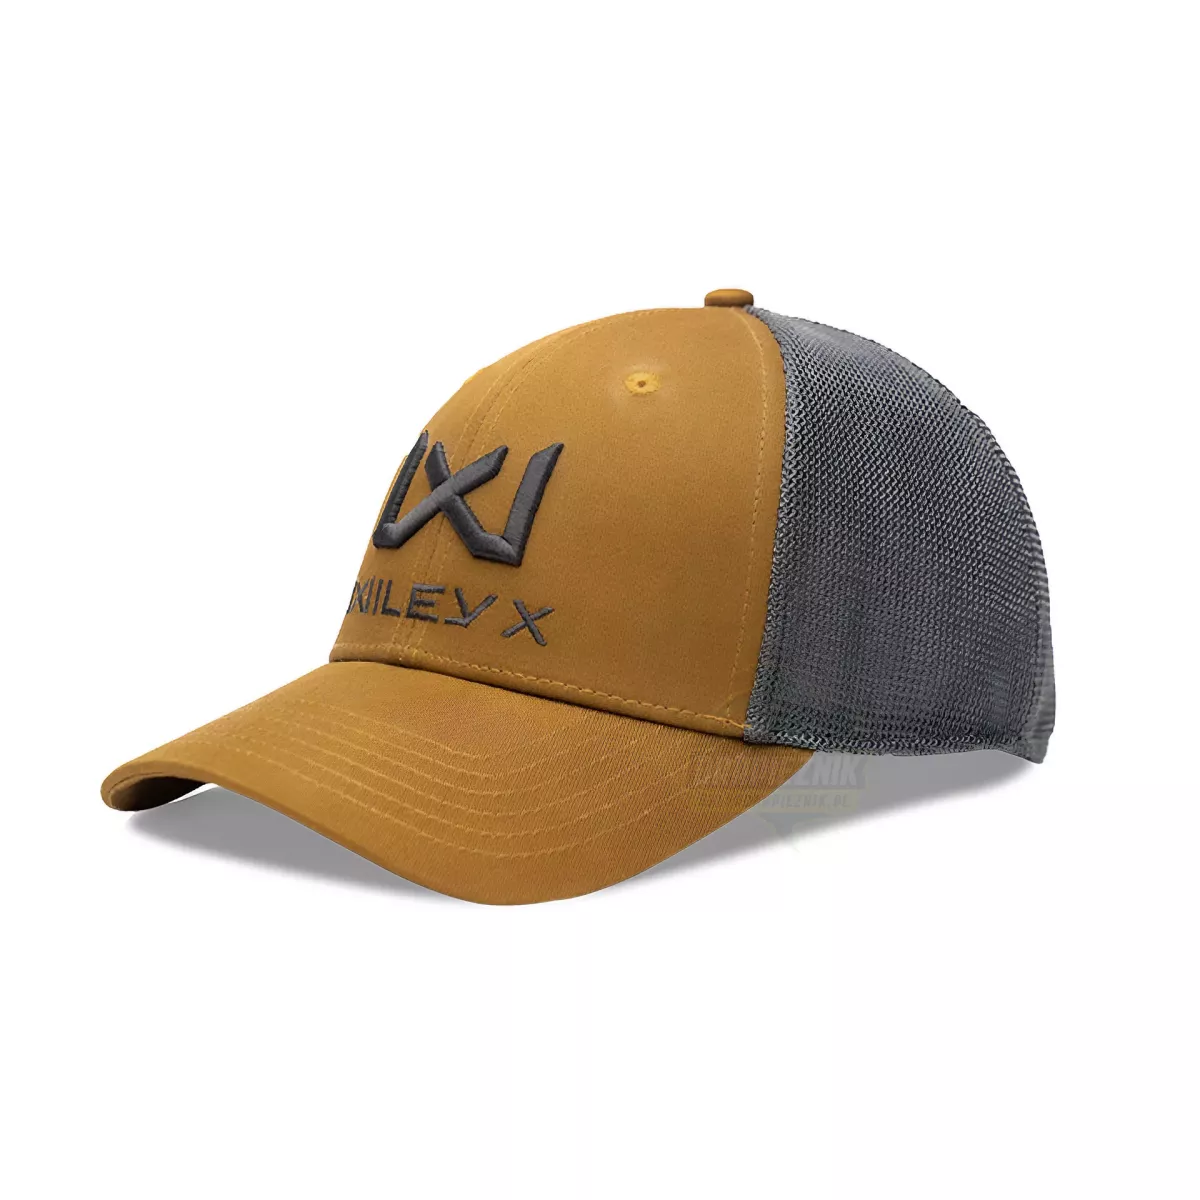 Czapka Wiley X Cap J921 - Tan / Grey WX Logo